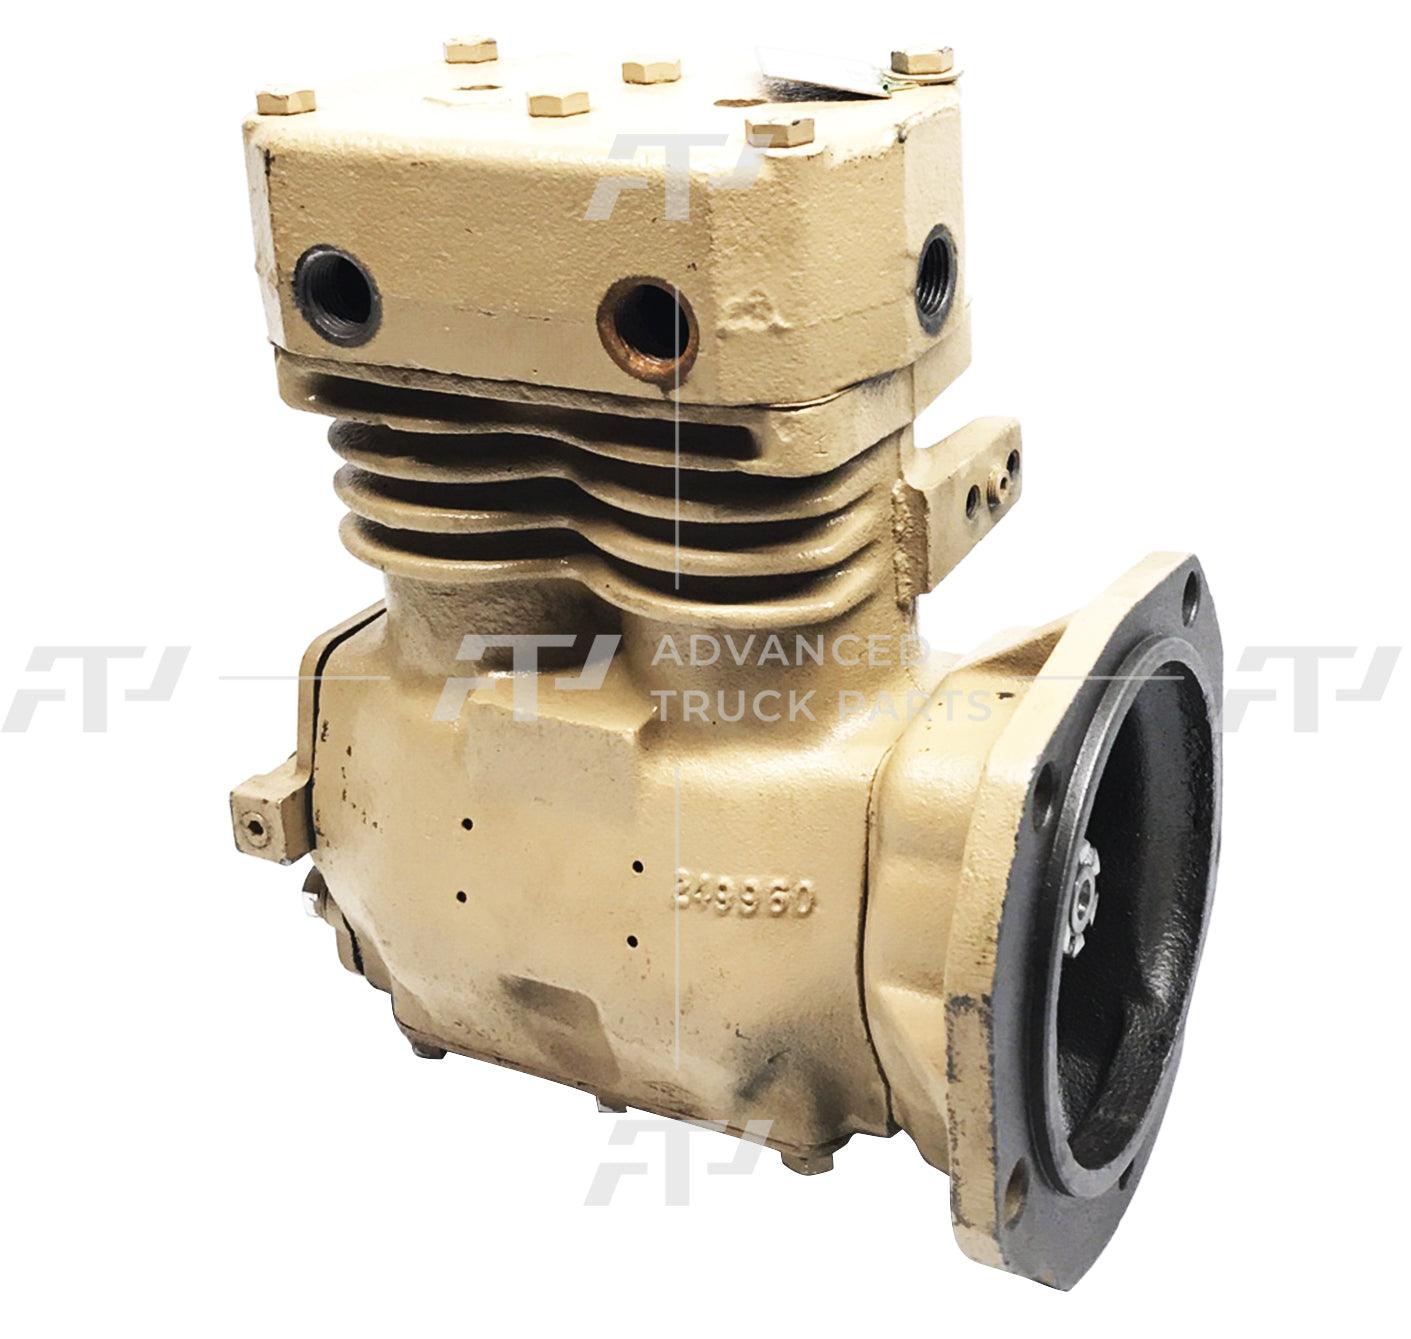 286538X Hd Plus® Air Compressor Tf501 For Detroit Diesel - ADVANCED TRUCK PARTS